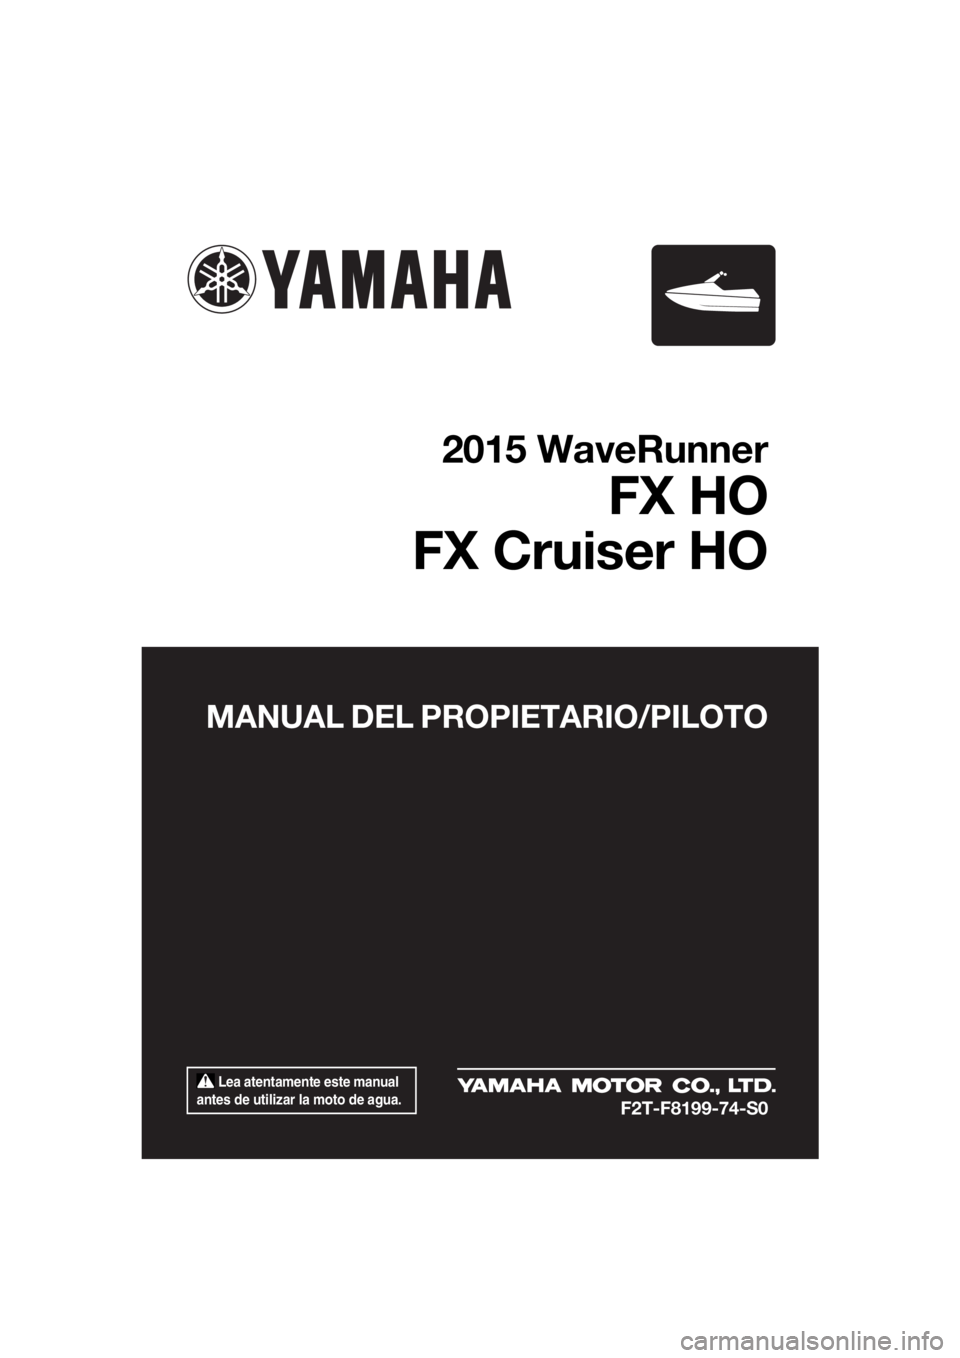 YAMAHA FX HO CRUISER 2015  Manuale de Empleo (in Spanish)  Lea atentamente este manual 
antes de utilizar la moto de agua.
MANUAL DEL PROPIETARIO/PILOTO
2015 WaveRunner
FX HO
FX Cruiser HO
F2T-F8199-74-S0
UF2T74S0.book  Page 1  Thursday, June 26, 2014  9:14 